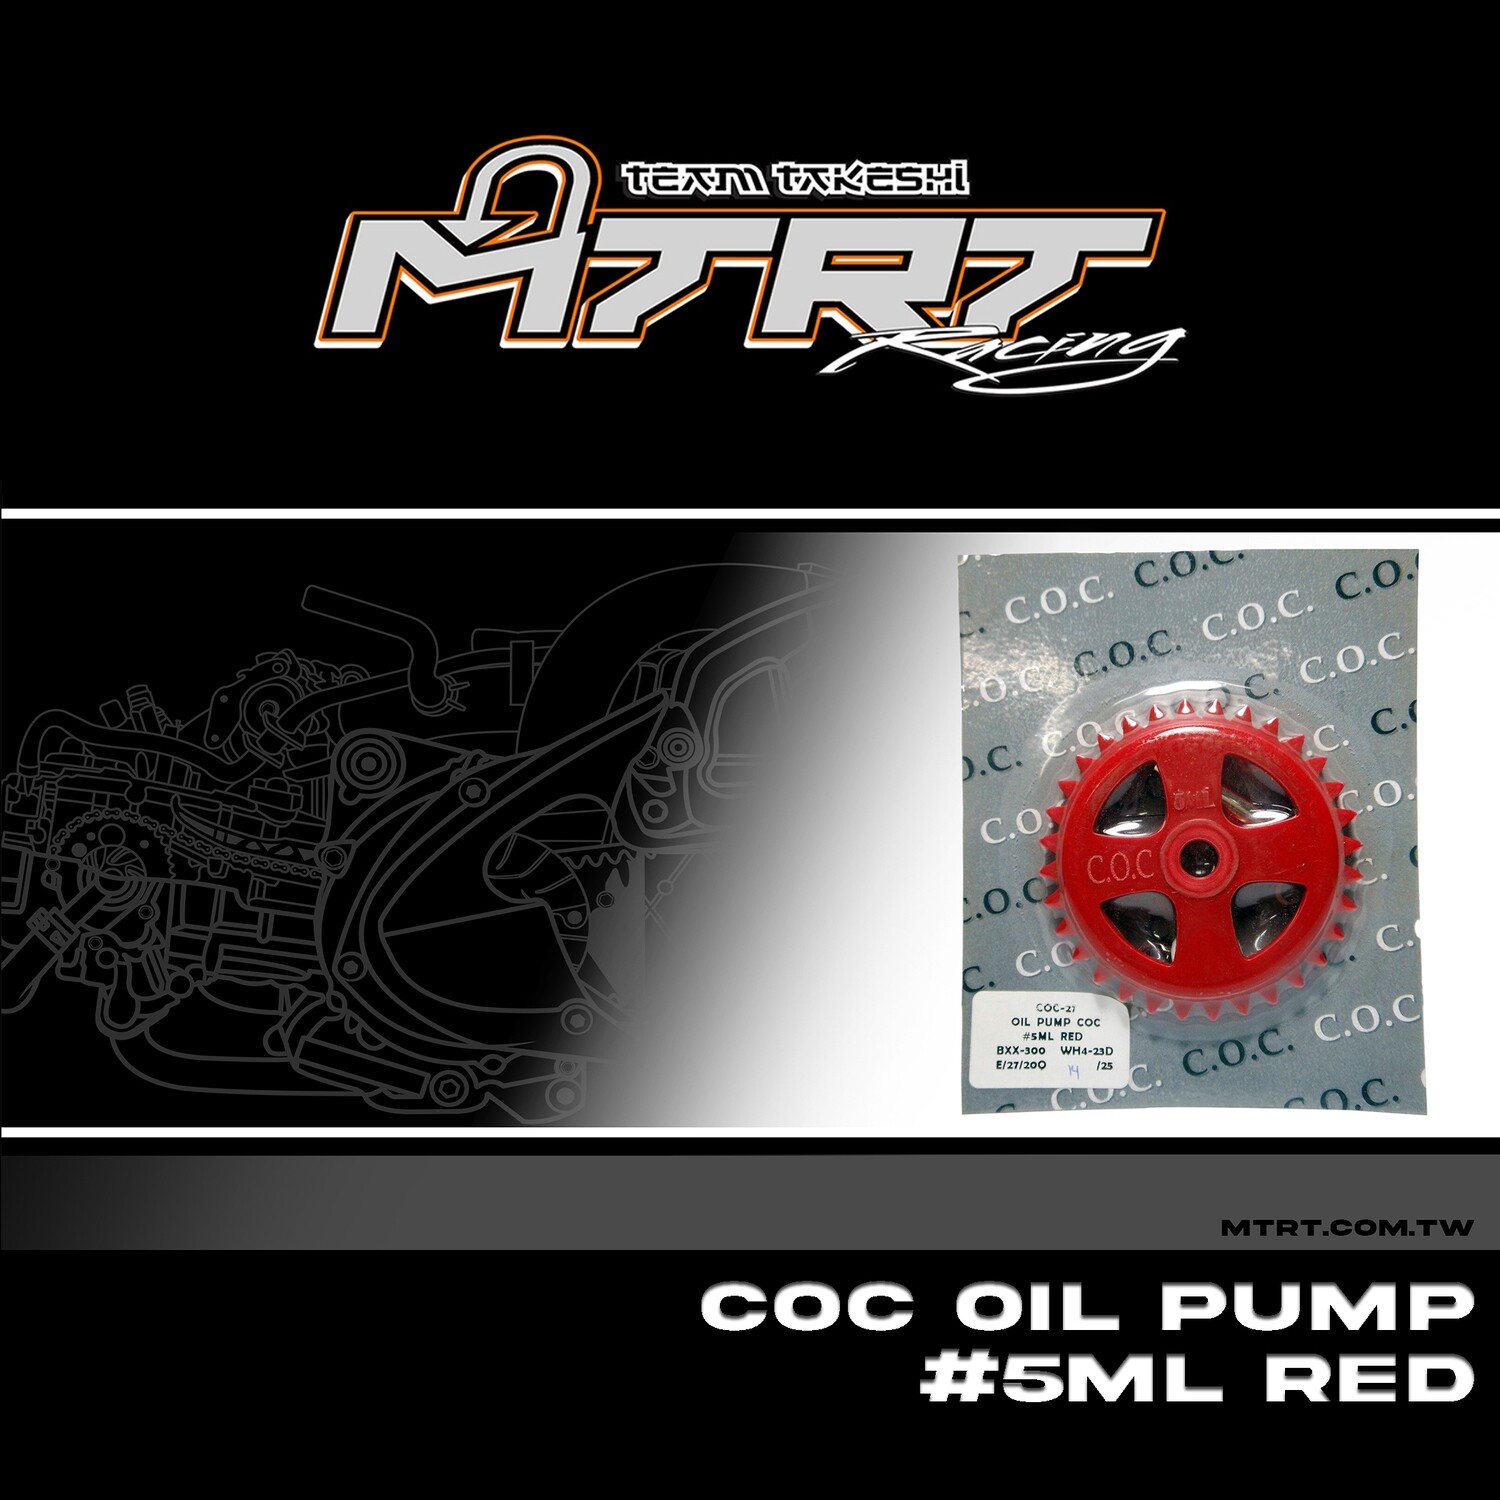 OIL PUMP 5ML RED